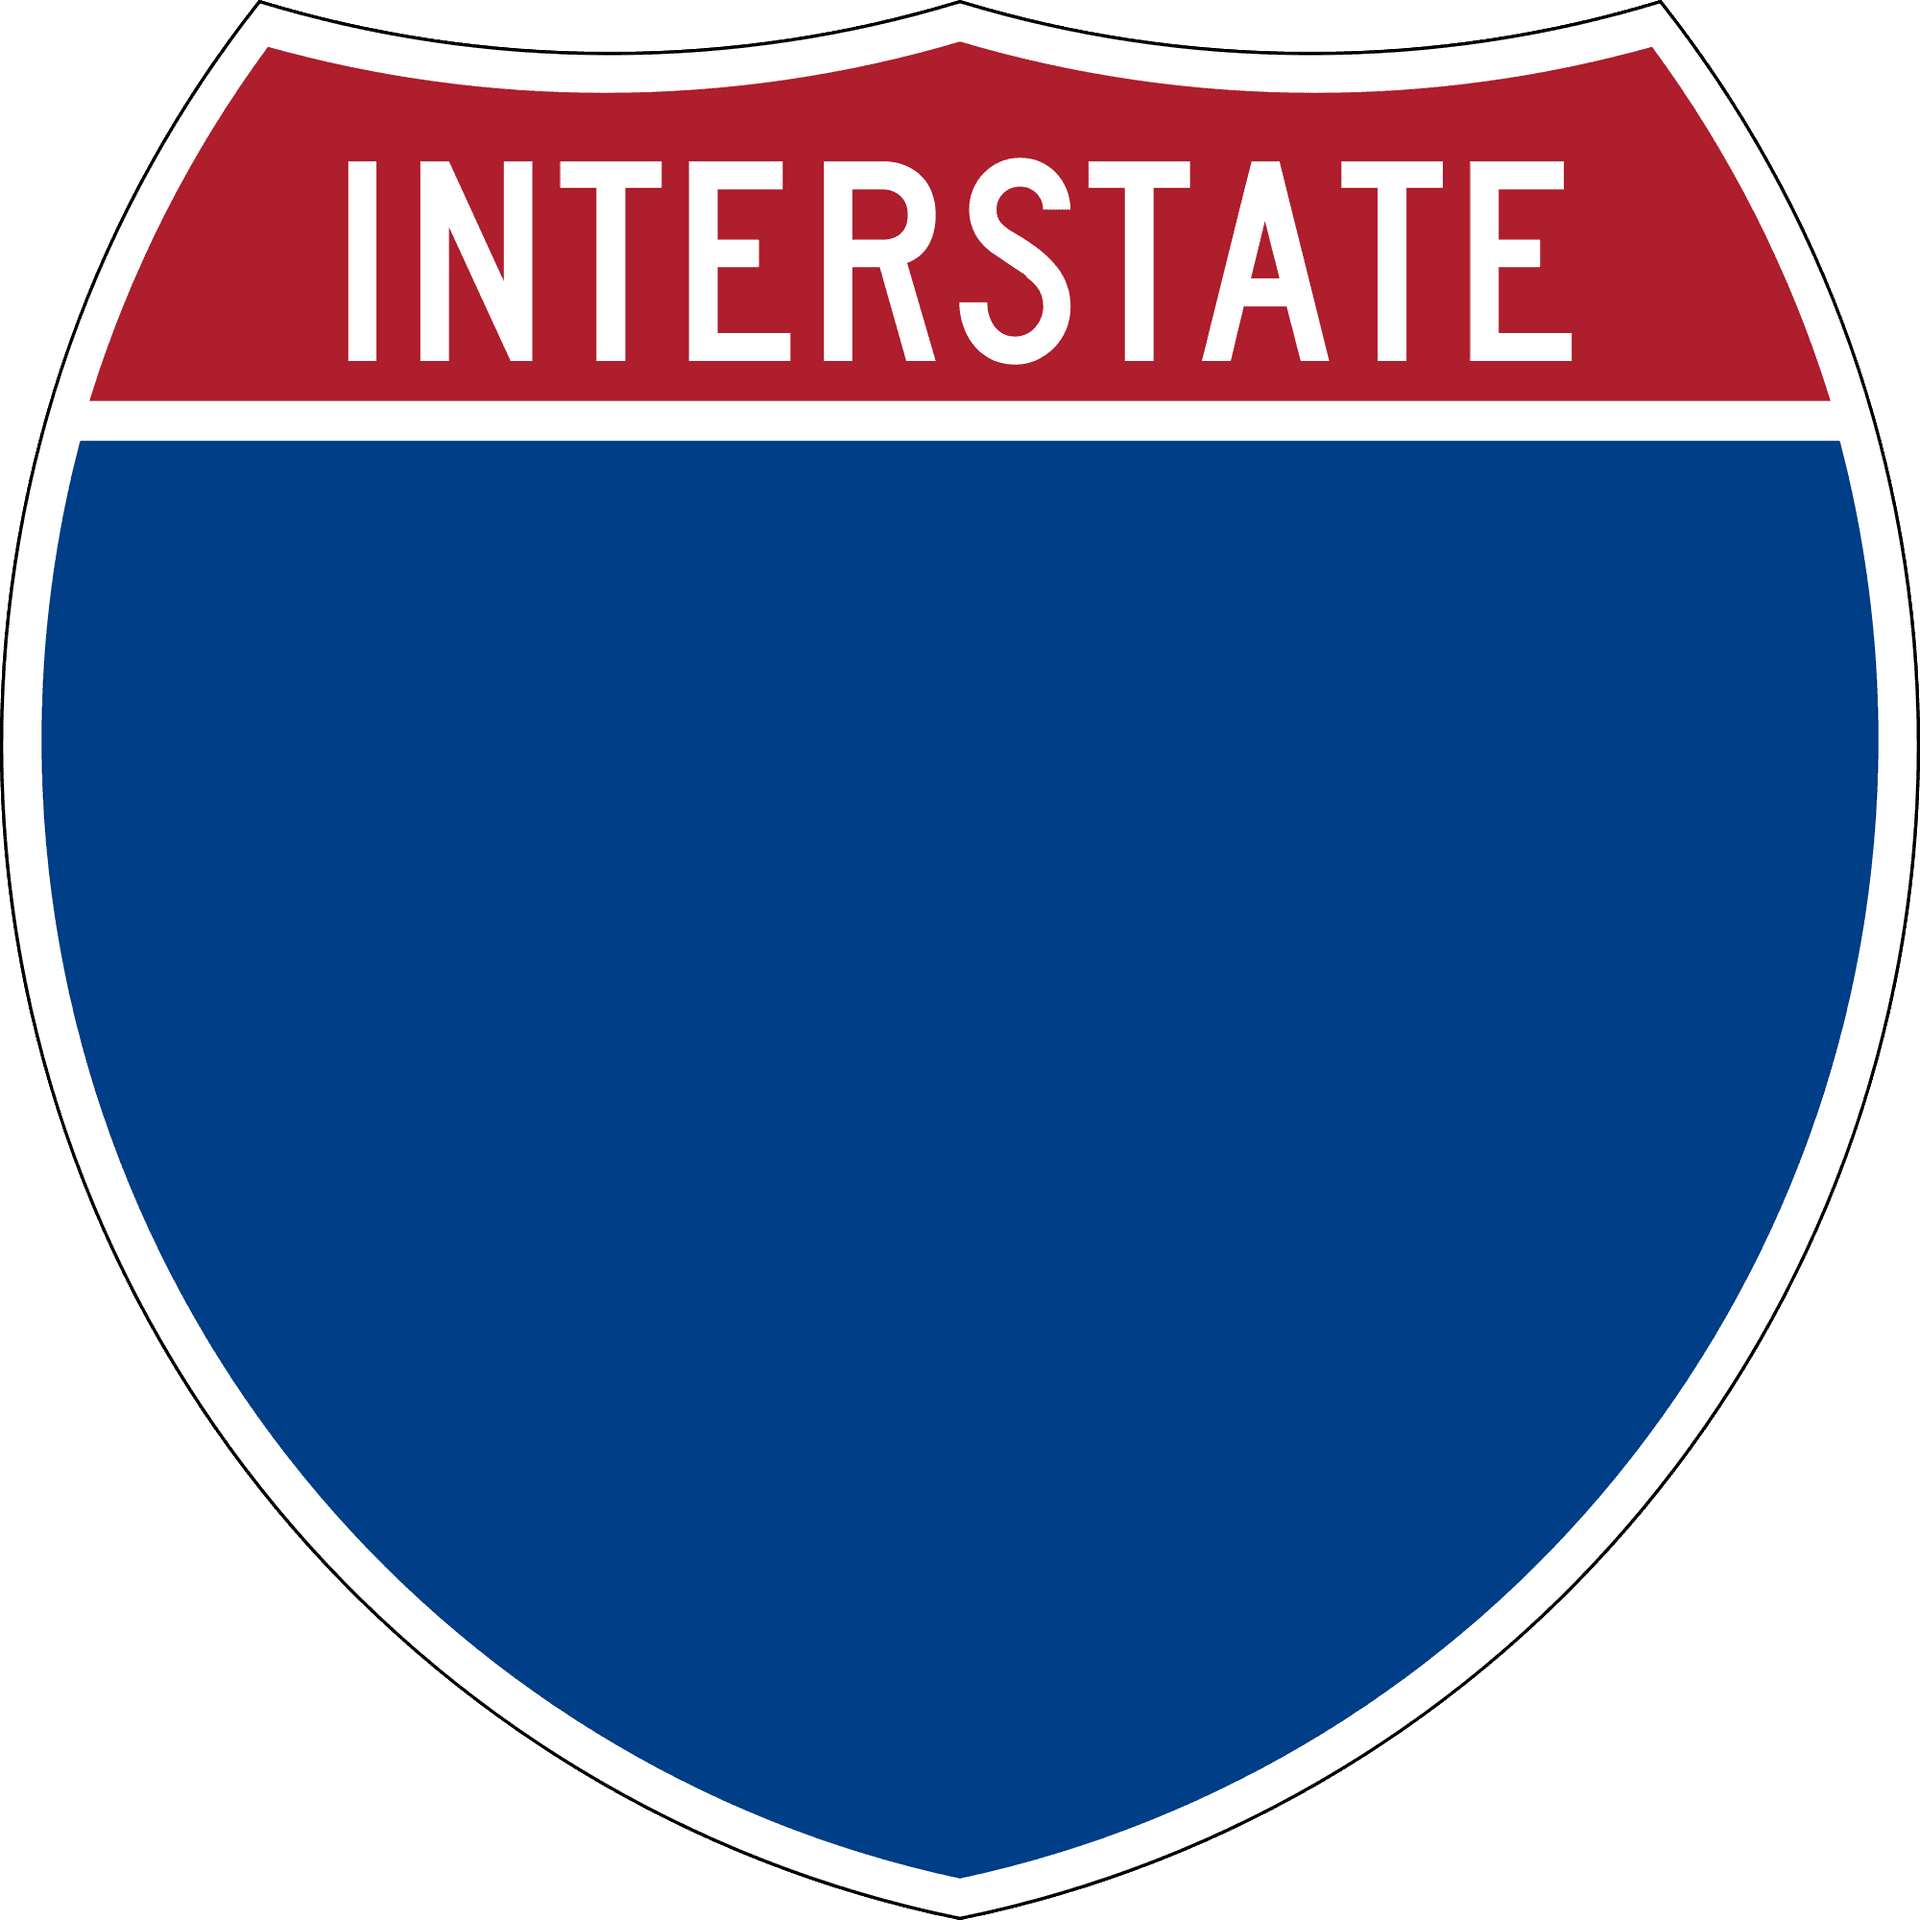 Interstate Highway Sign Blank PNG image